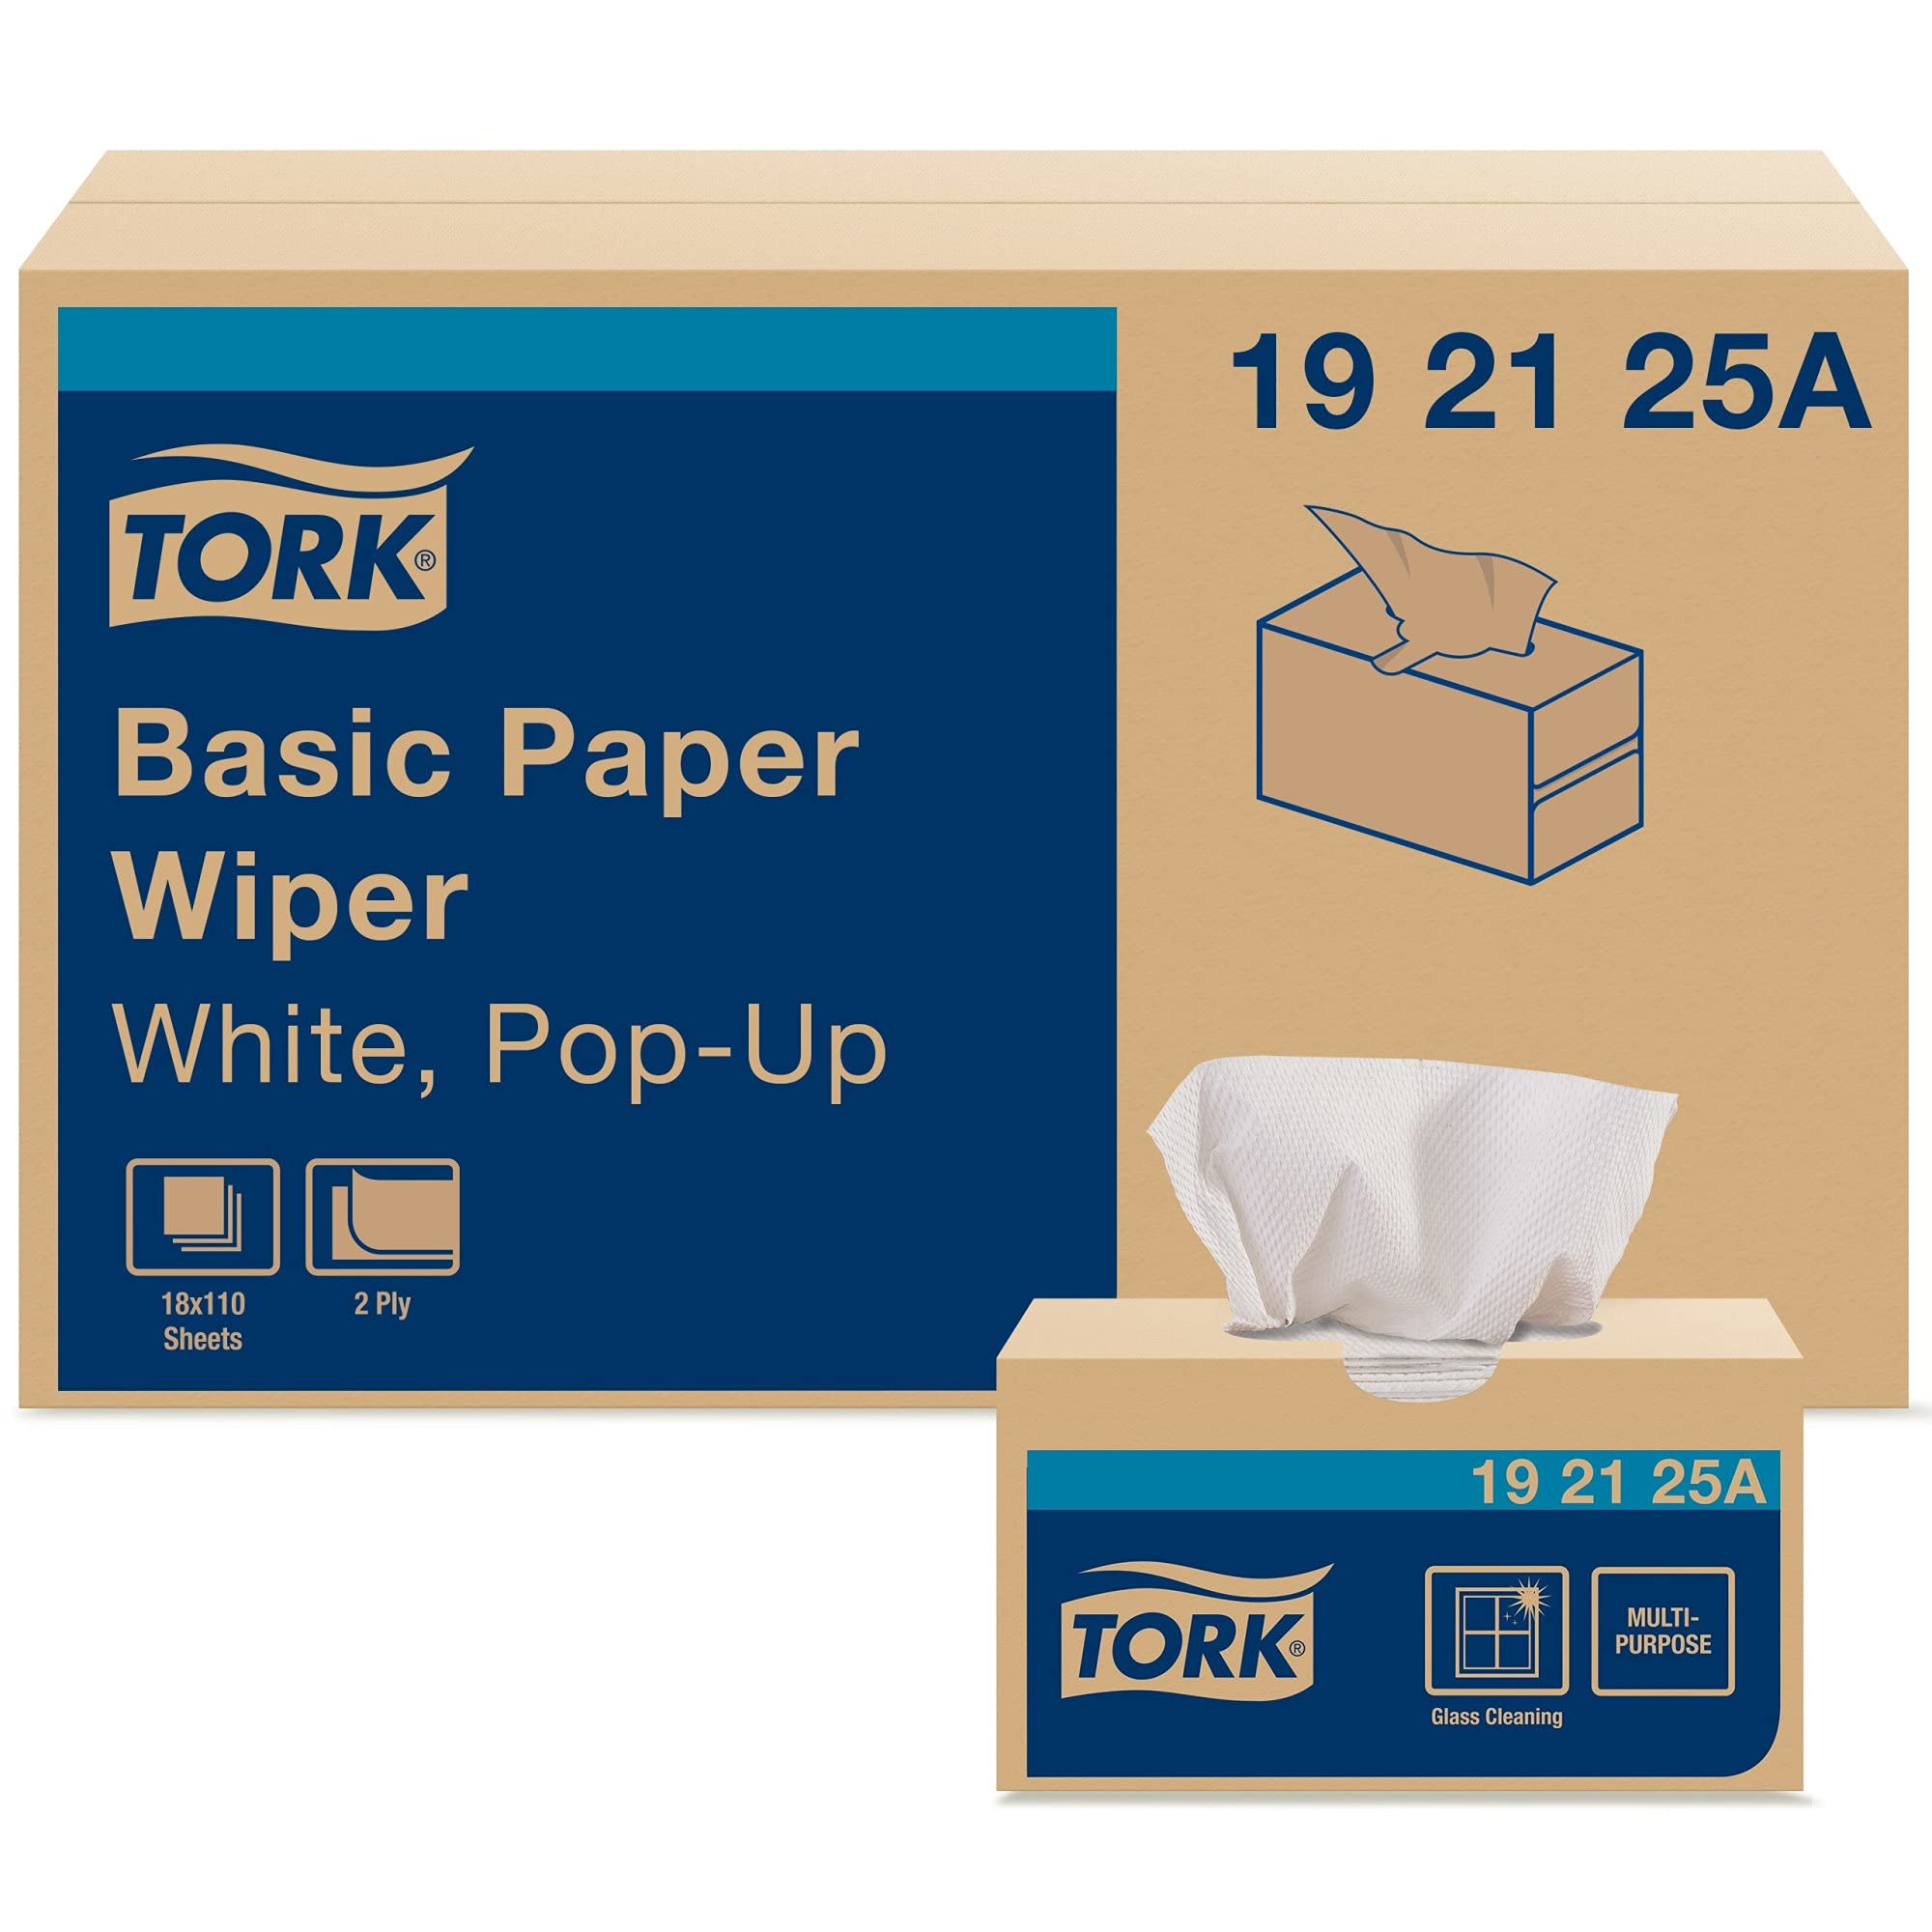 Tork Basic Paper Wiper White, Pop-up Box, 18 x 110 Sheets, 192125A